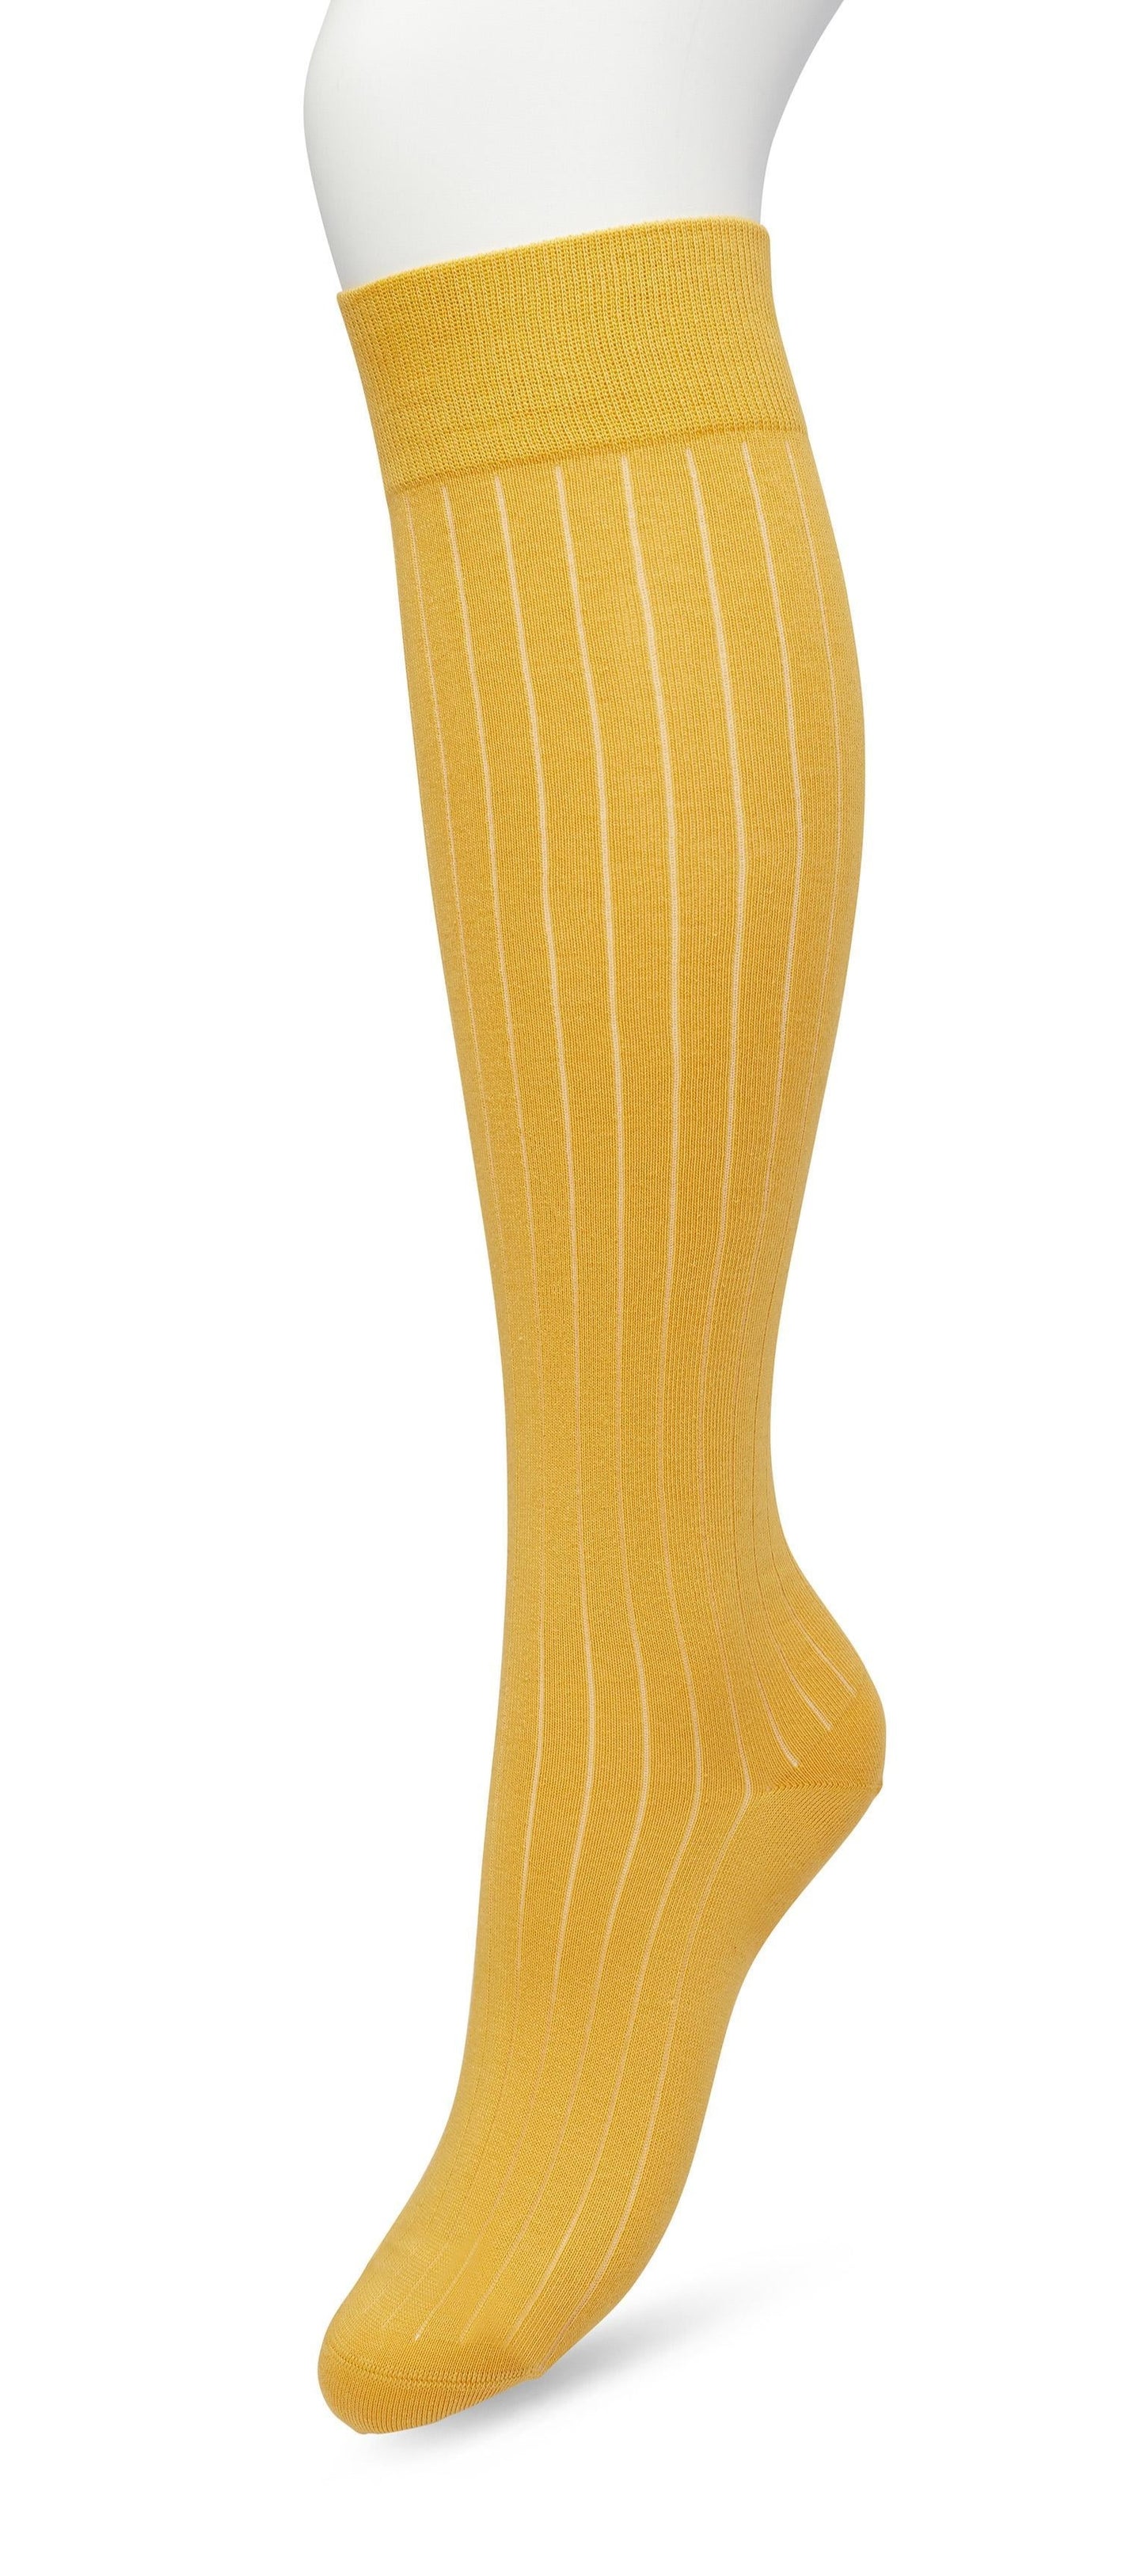 Bonnie Doon Rib Knee High Sock - Mustard yellow light knitted rib knee-high sock with shaped heel, flat toe seam and deep elasticated cuff.